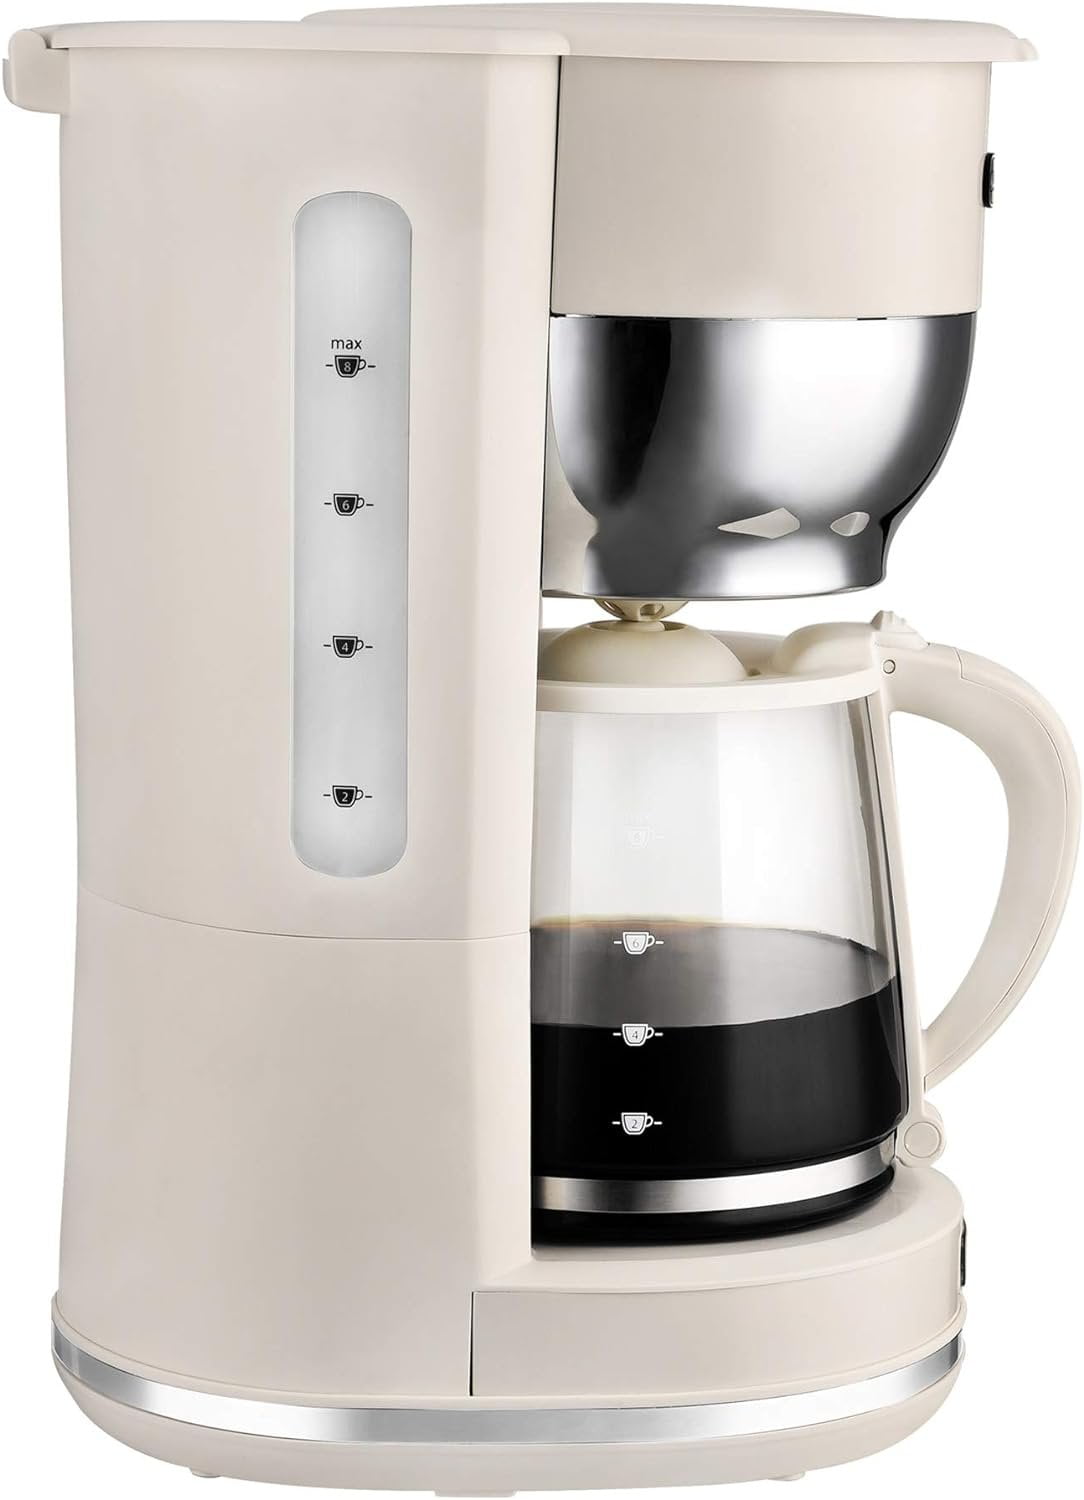 10-Cup Retro Coffee Maker (Black), Kalorik